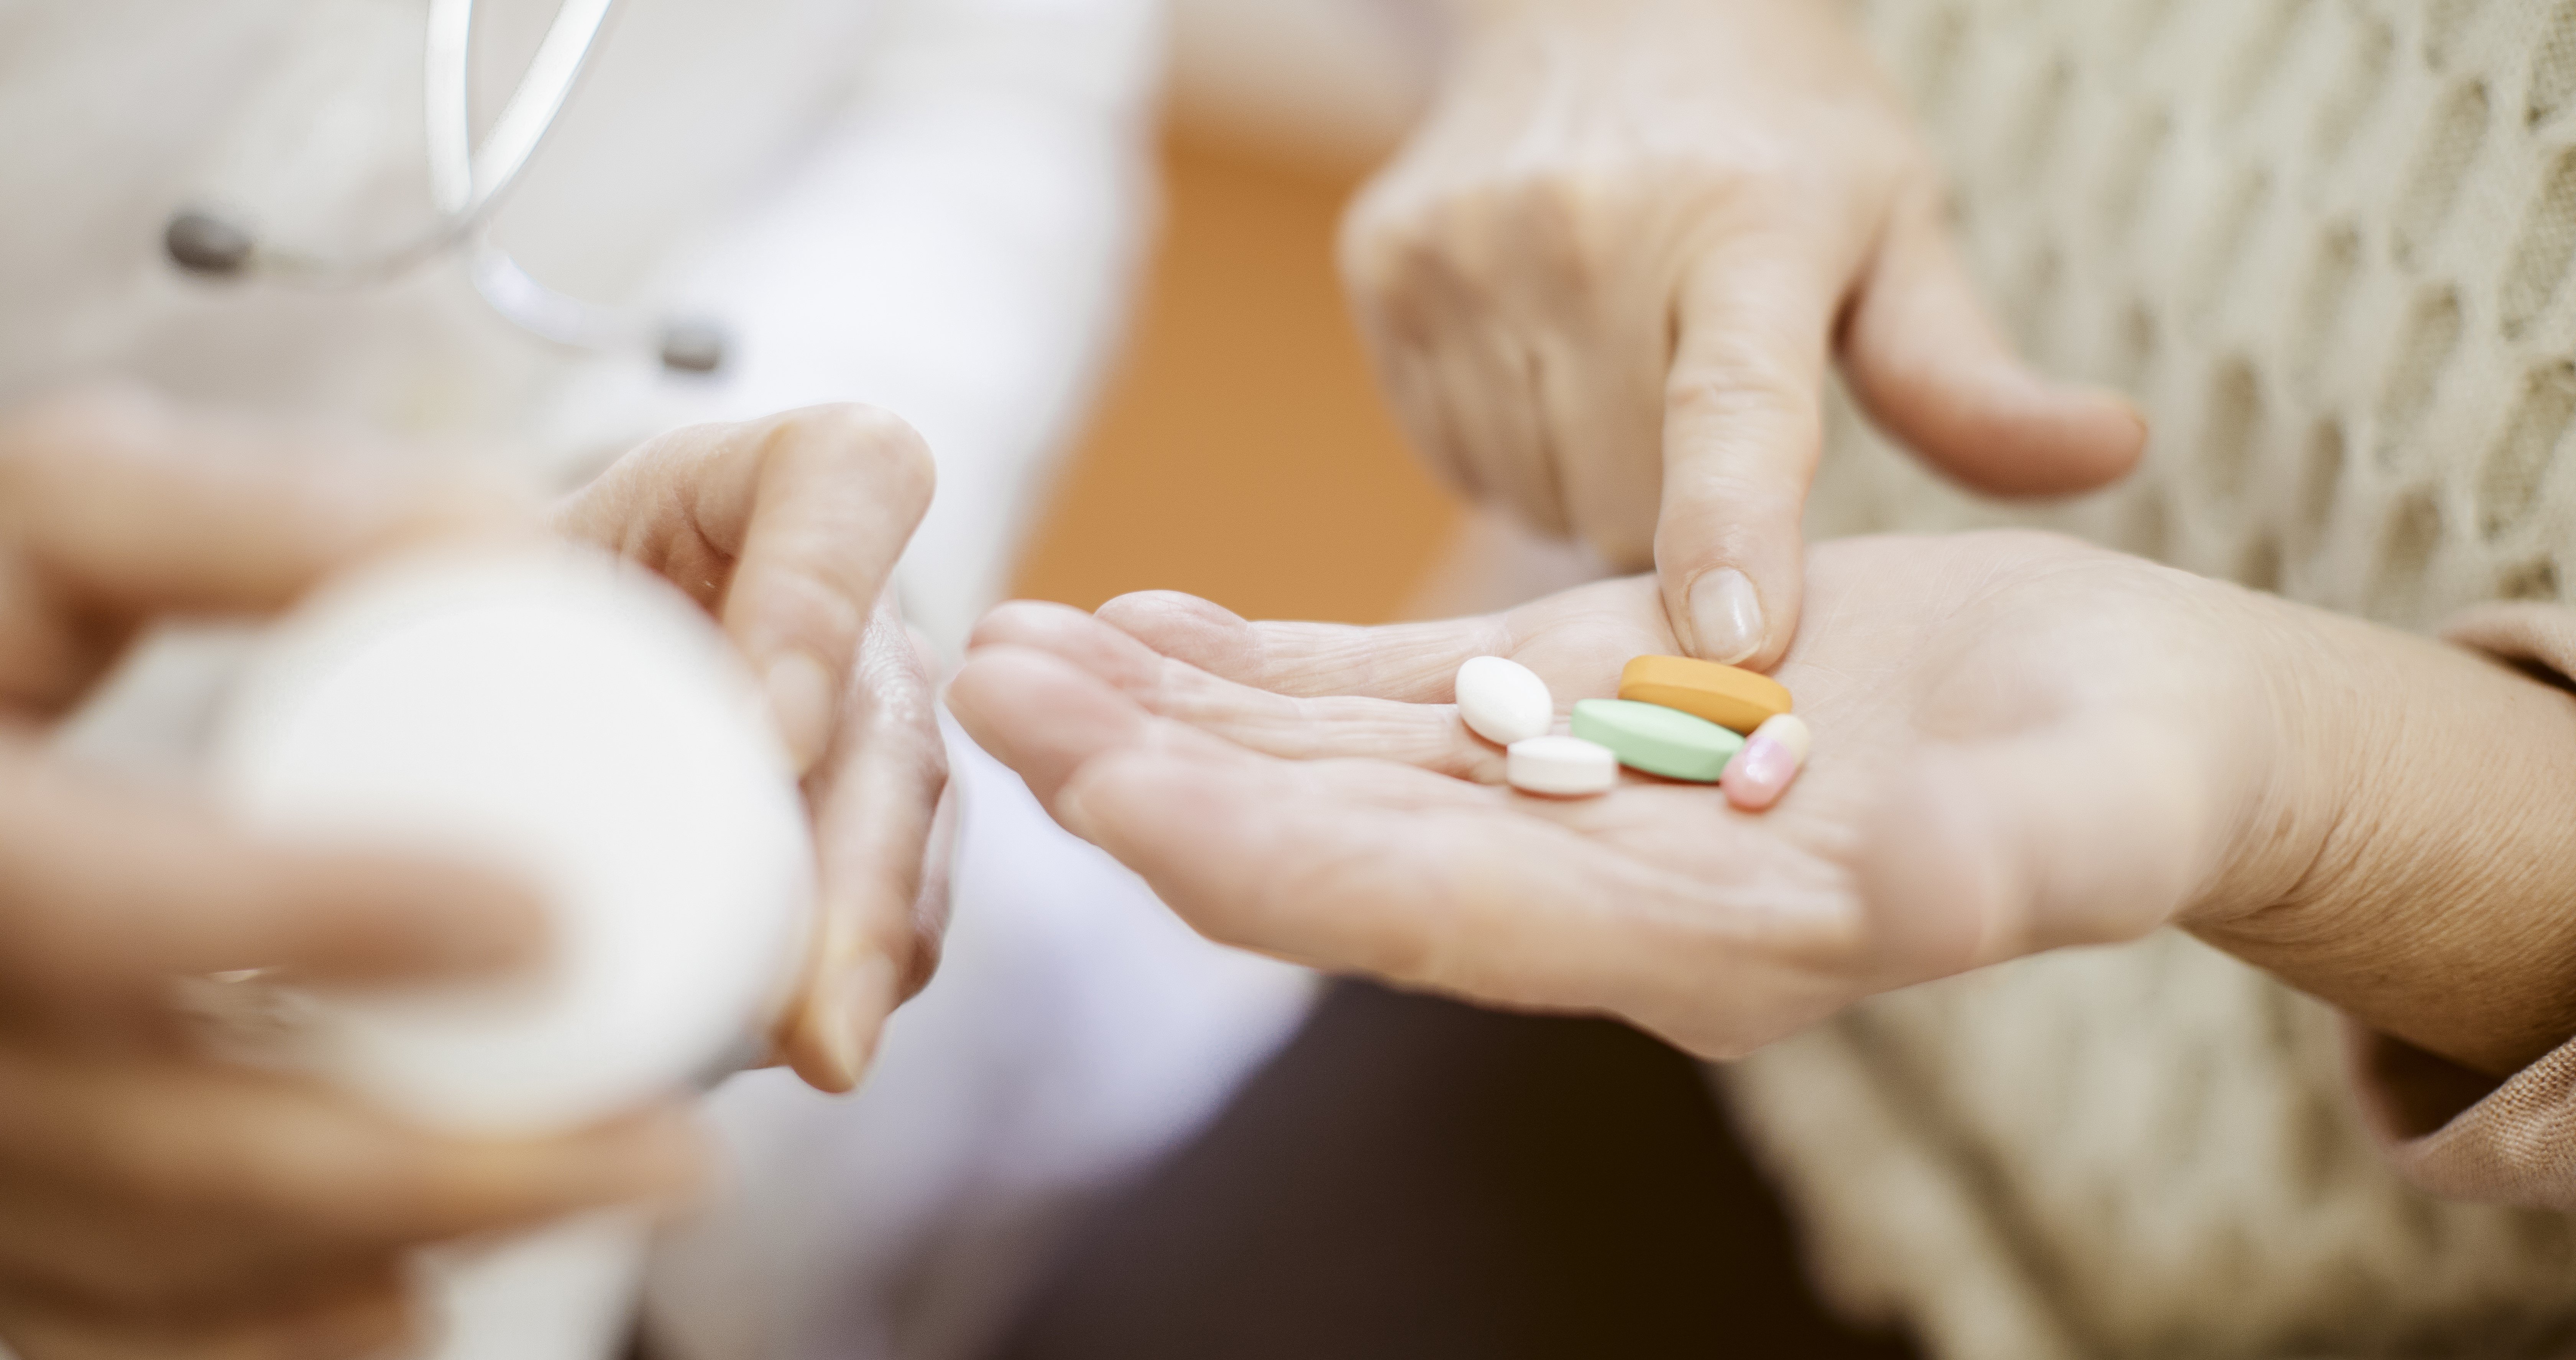 Is Medication Causing Your Parent’s Symptoms?